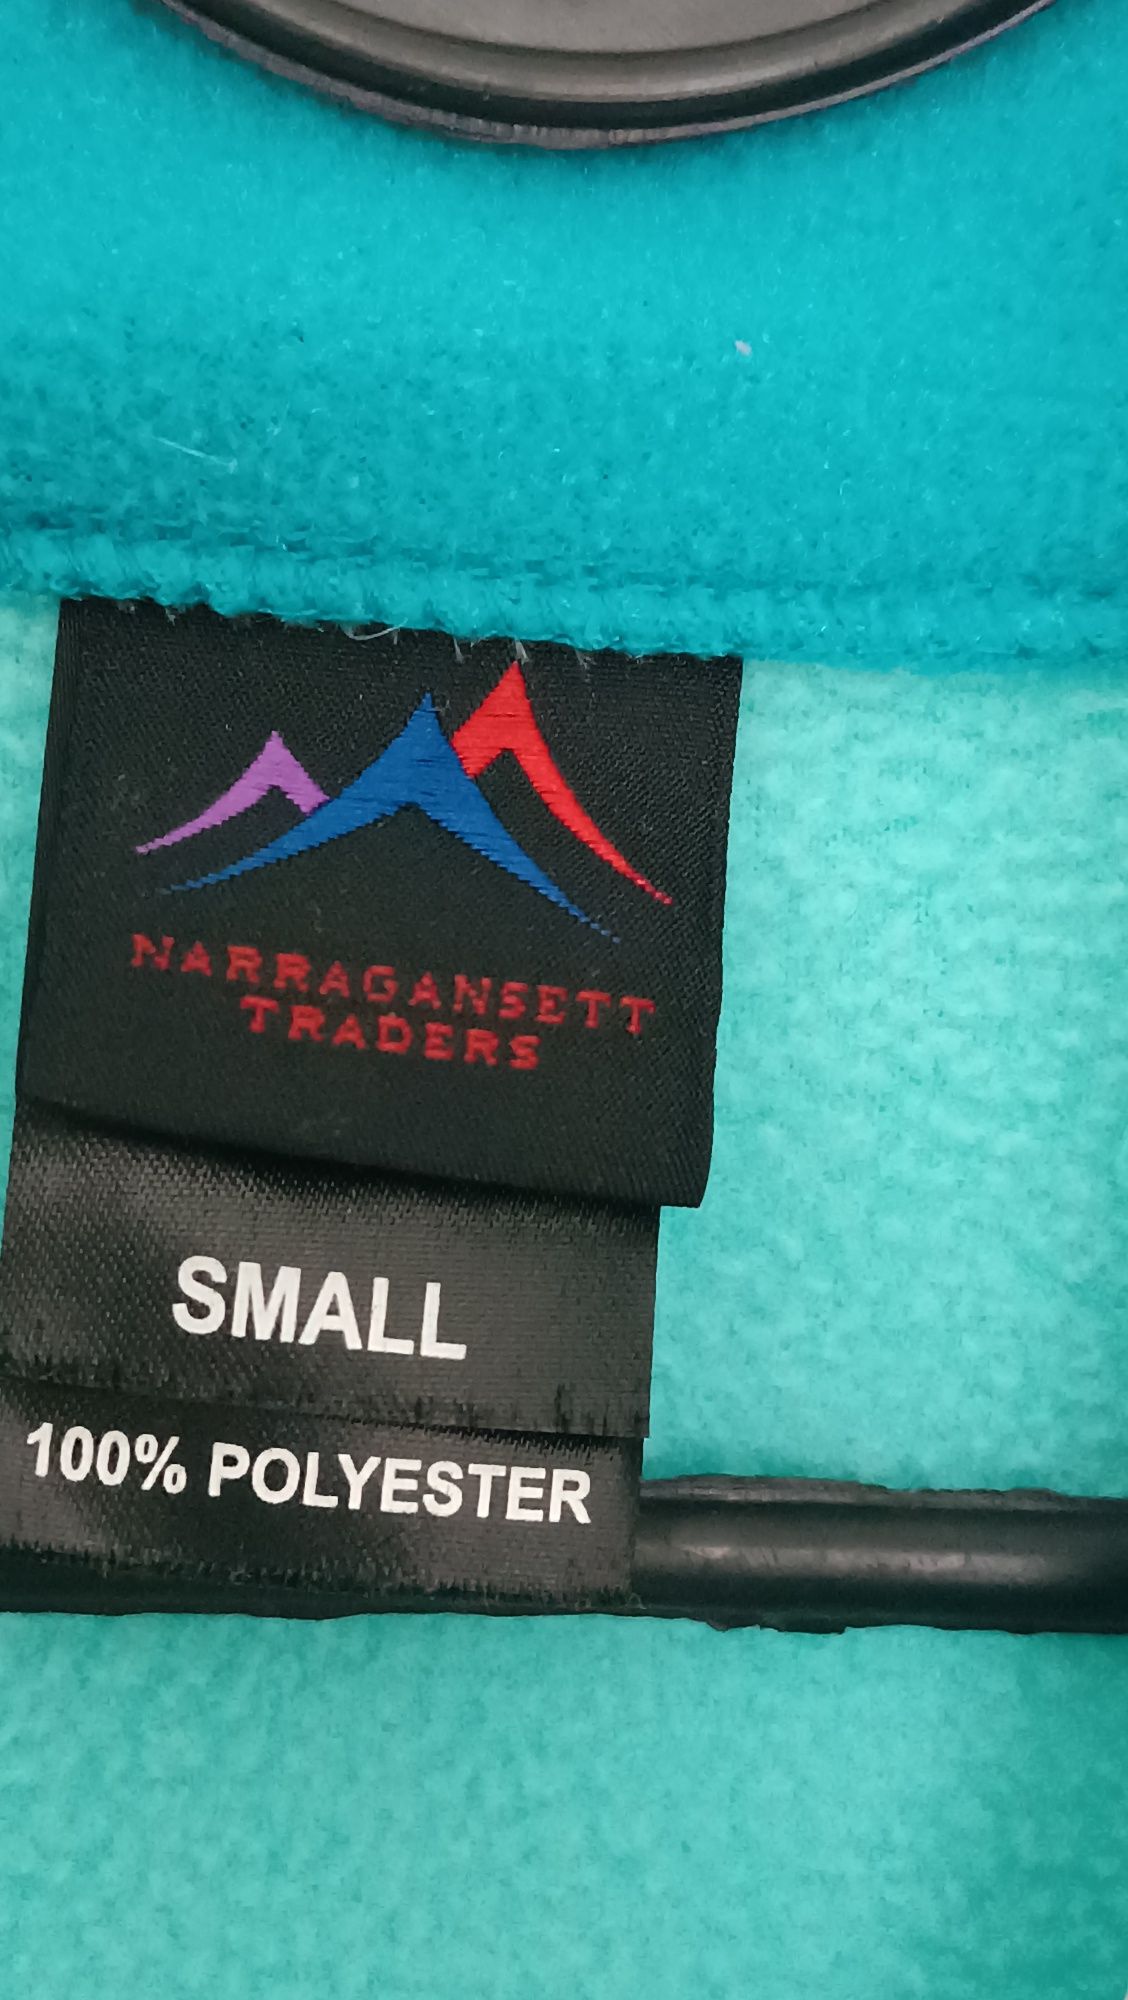 Bluza polarowa Narragansett Traders roz S